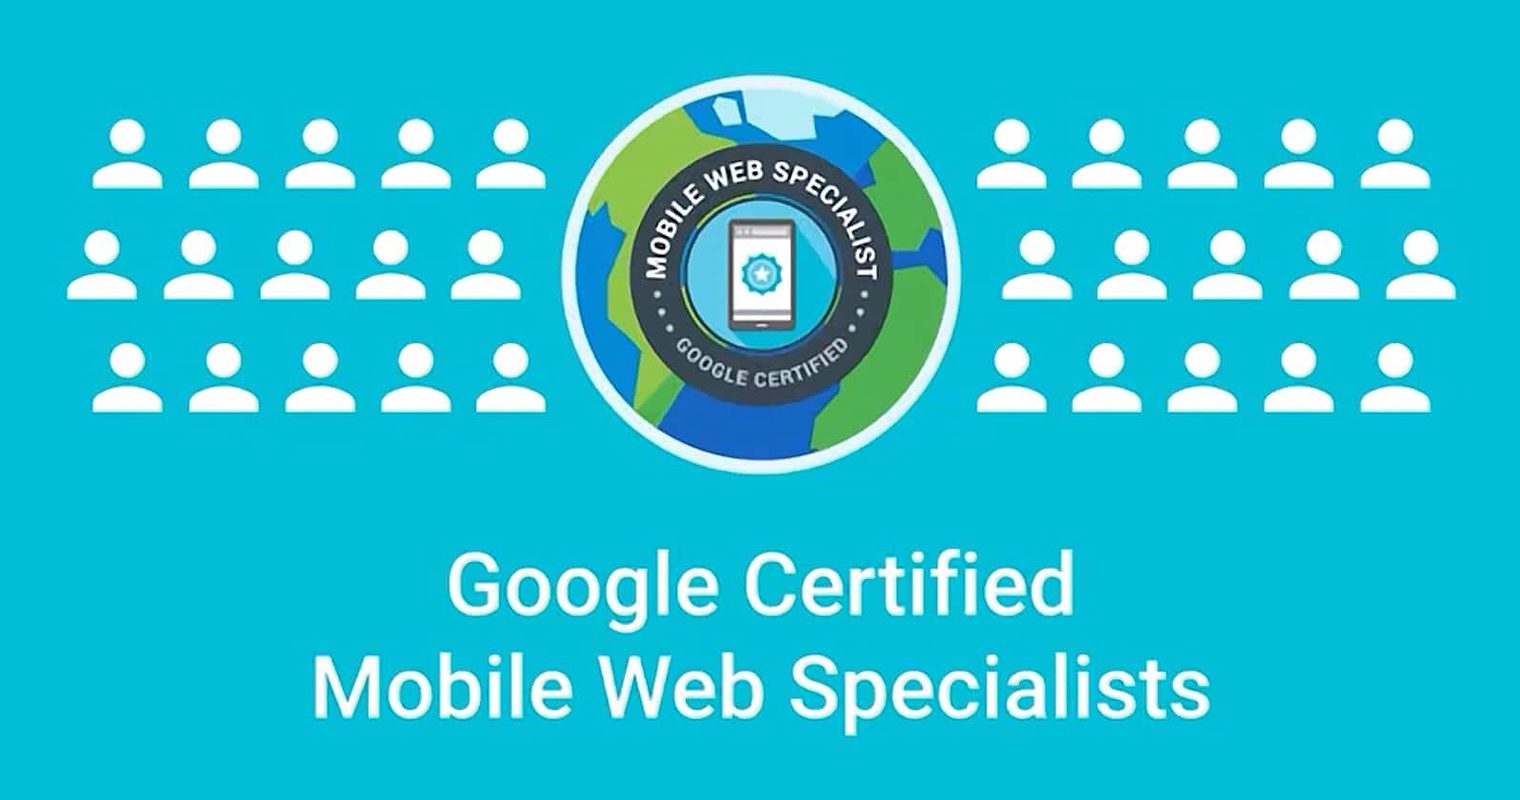 Google is Offering a Mobile Web Developer Certification for $99